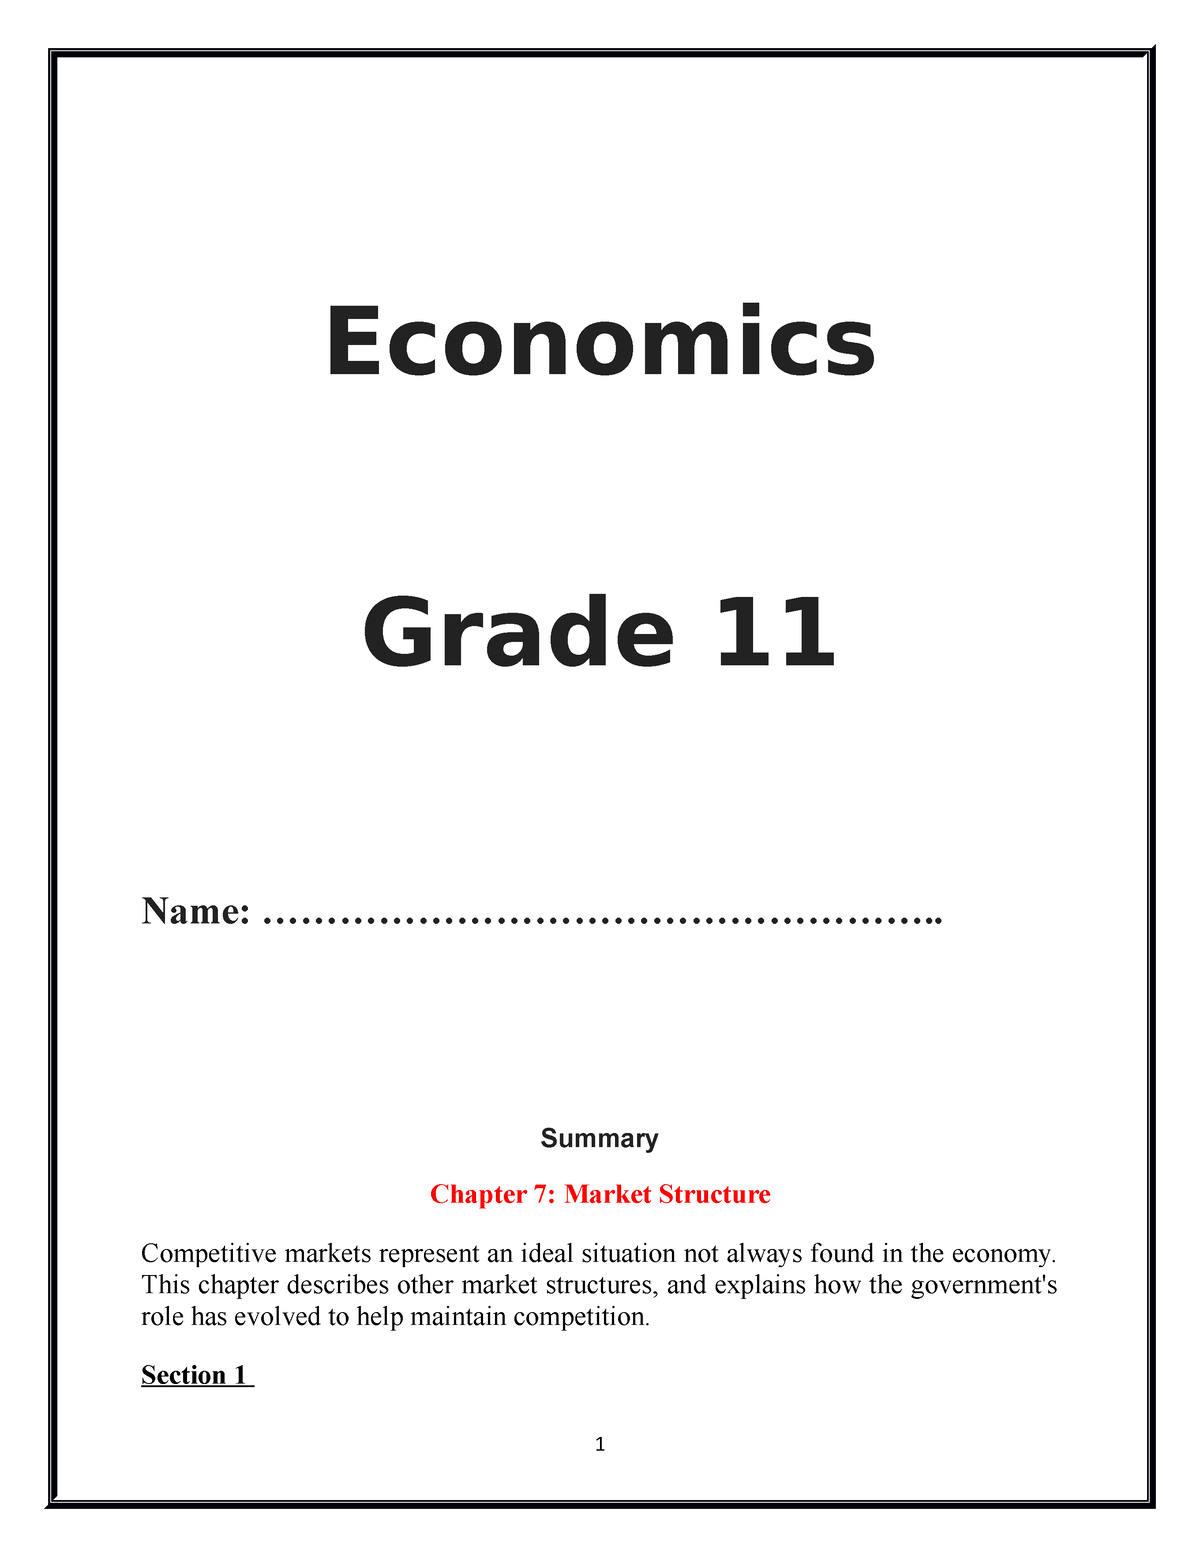 possible essays for economics grade 11 term 1